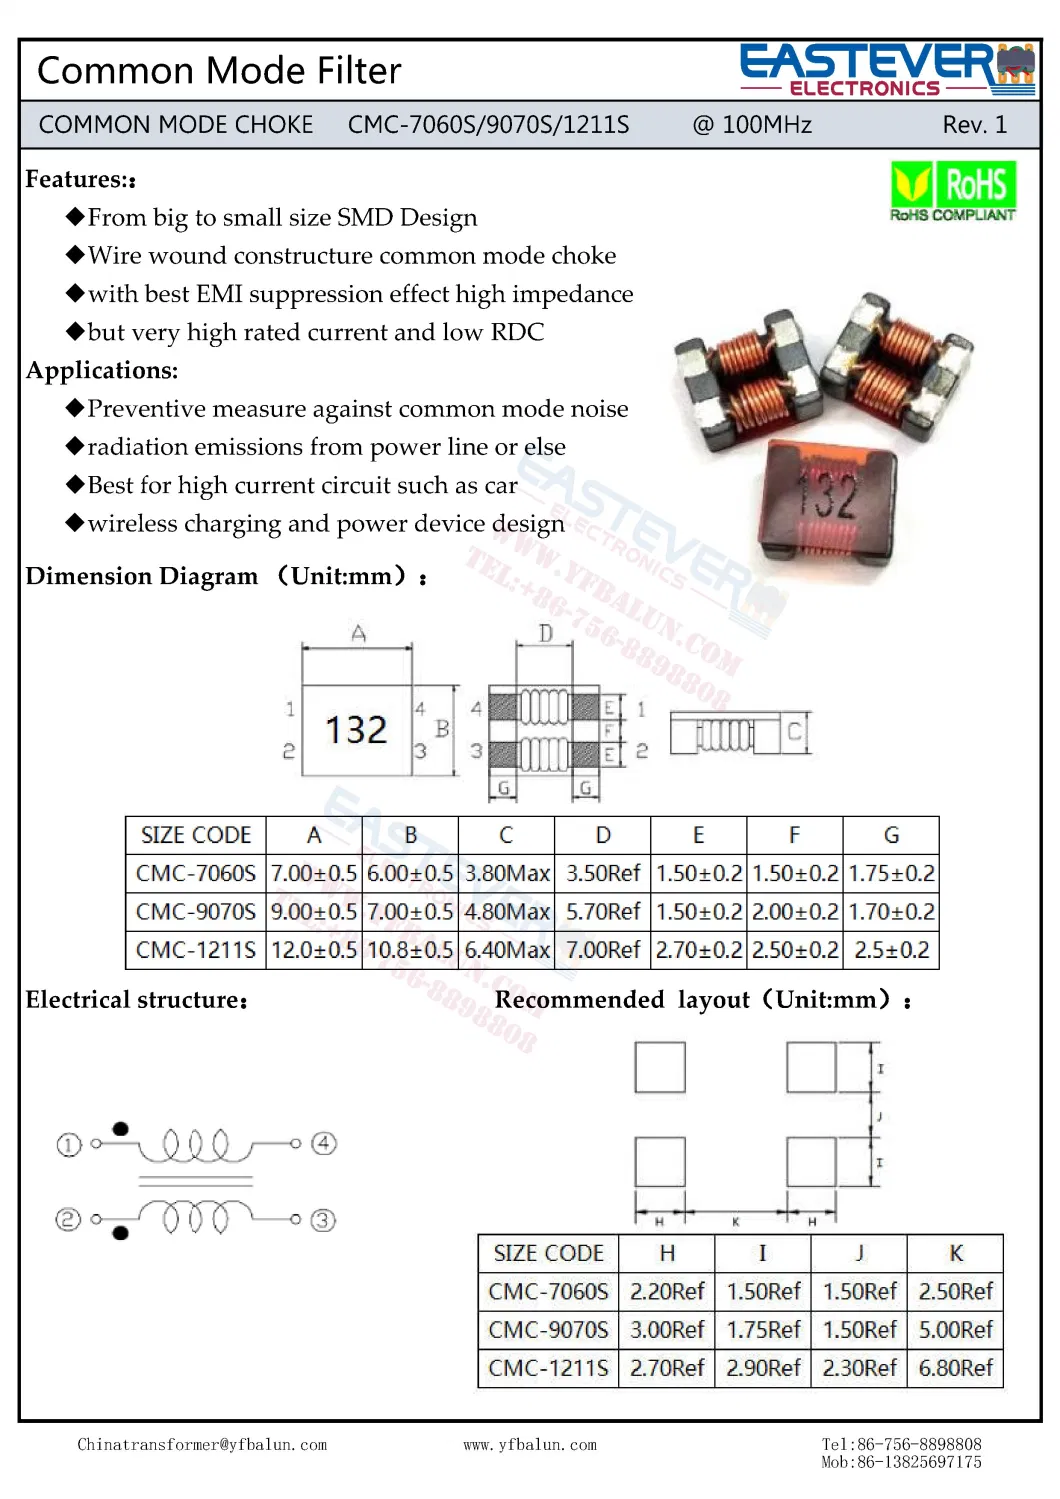 CMC-7060s/9070s/1211s Series Common Mode Choke Filter Preventive Measure Against Common Mode Noise Radiation